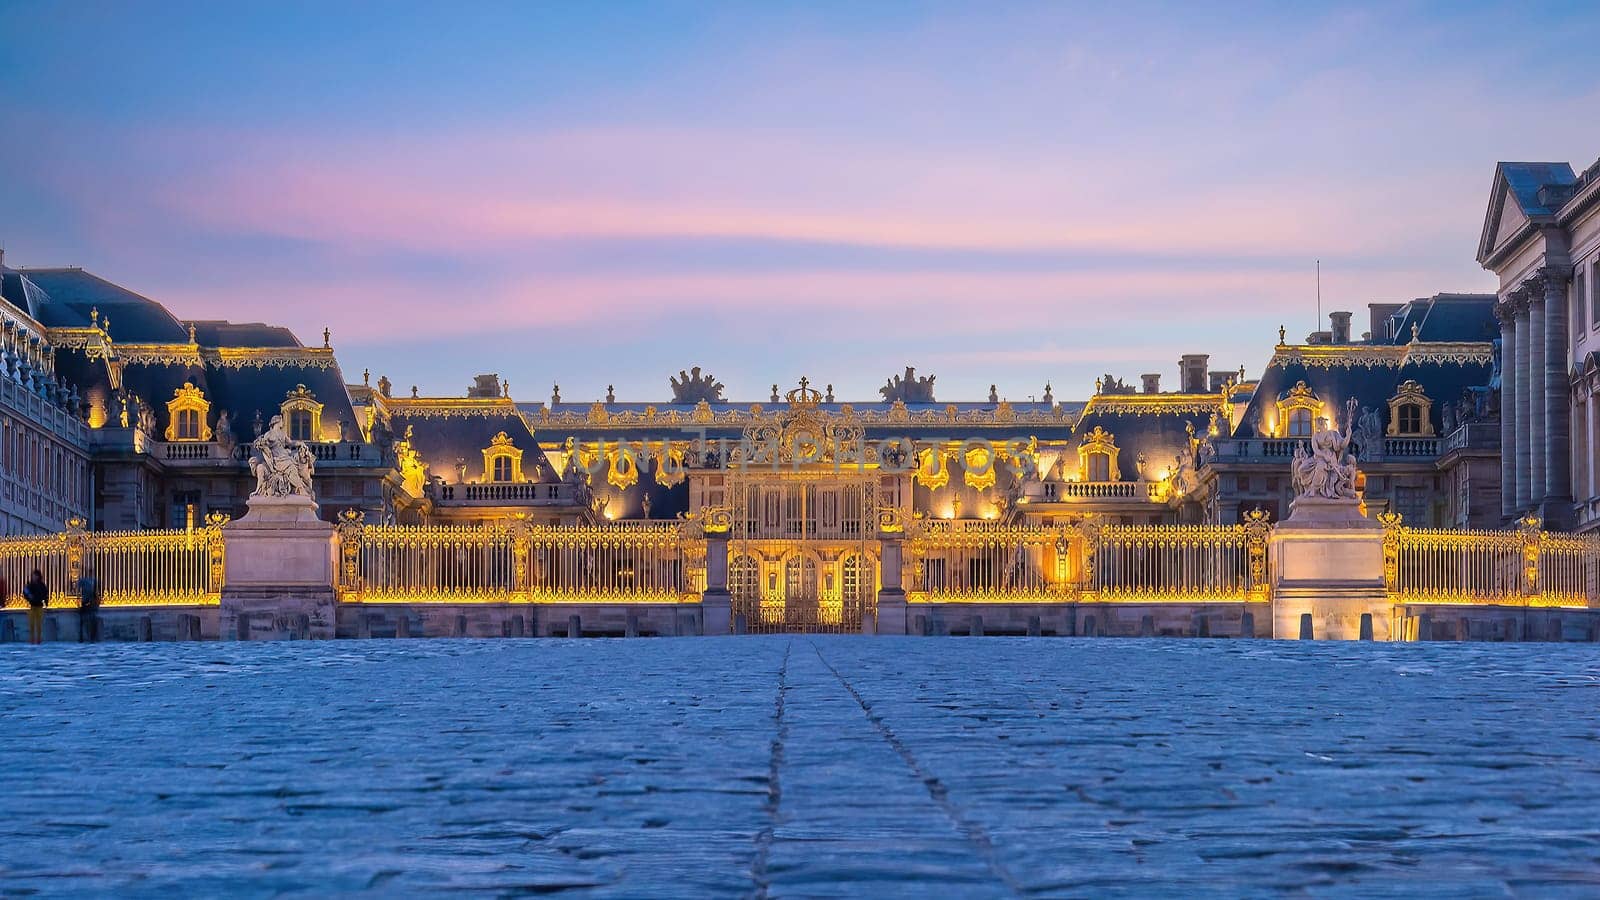 Entrance of Chateau de Versailles, near Paris in France  by f11photo